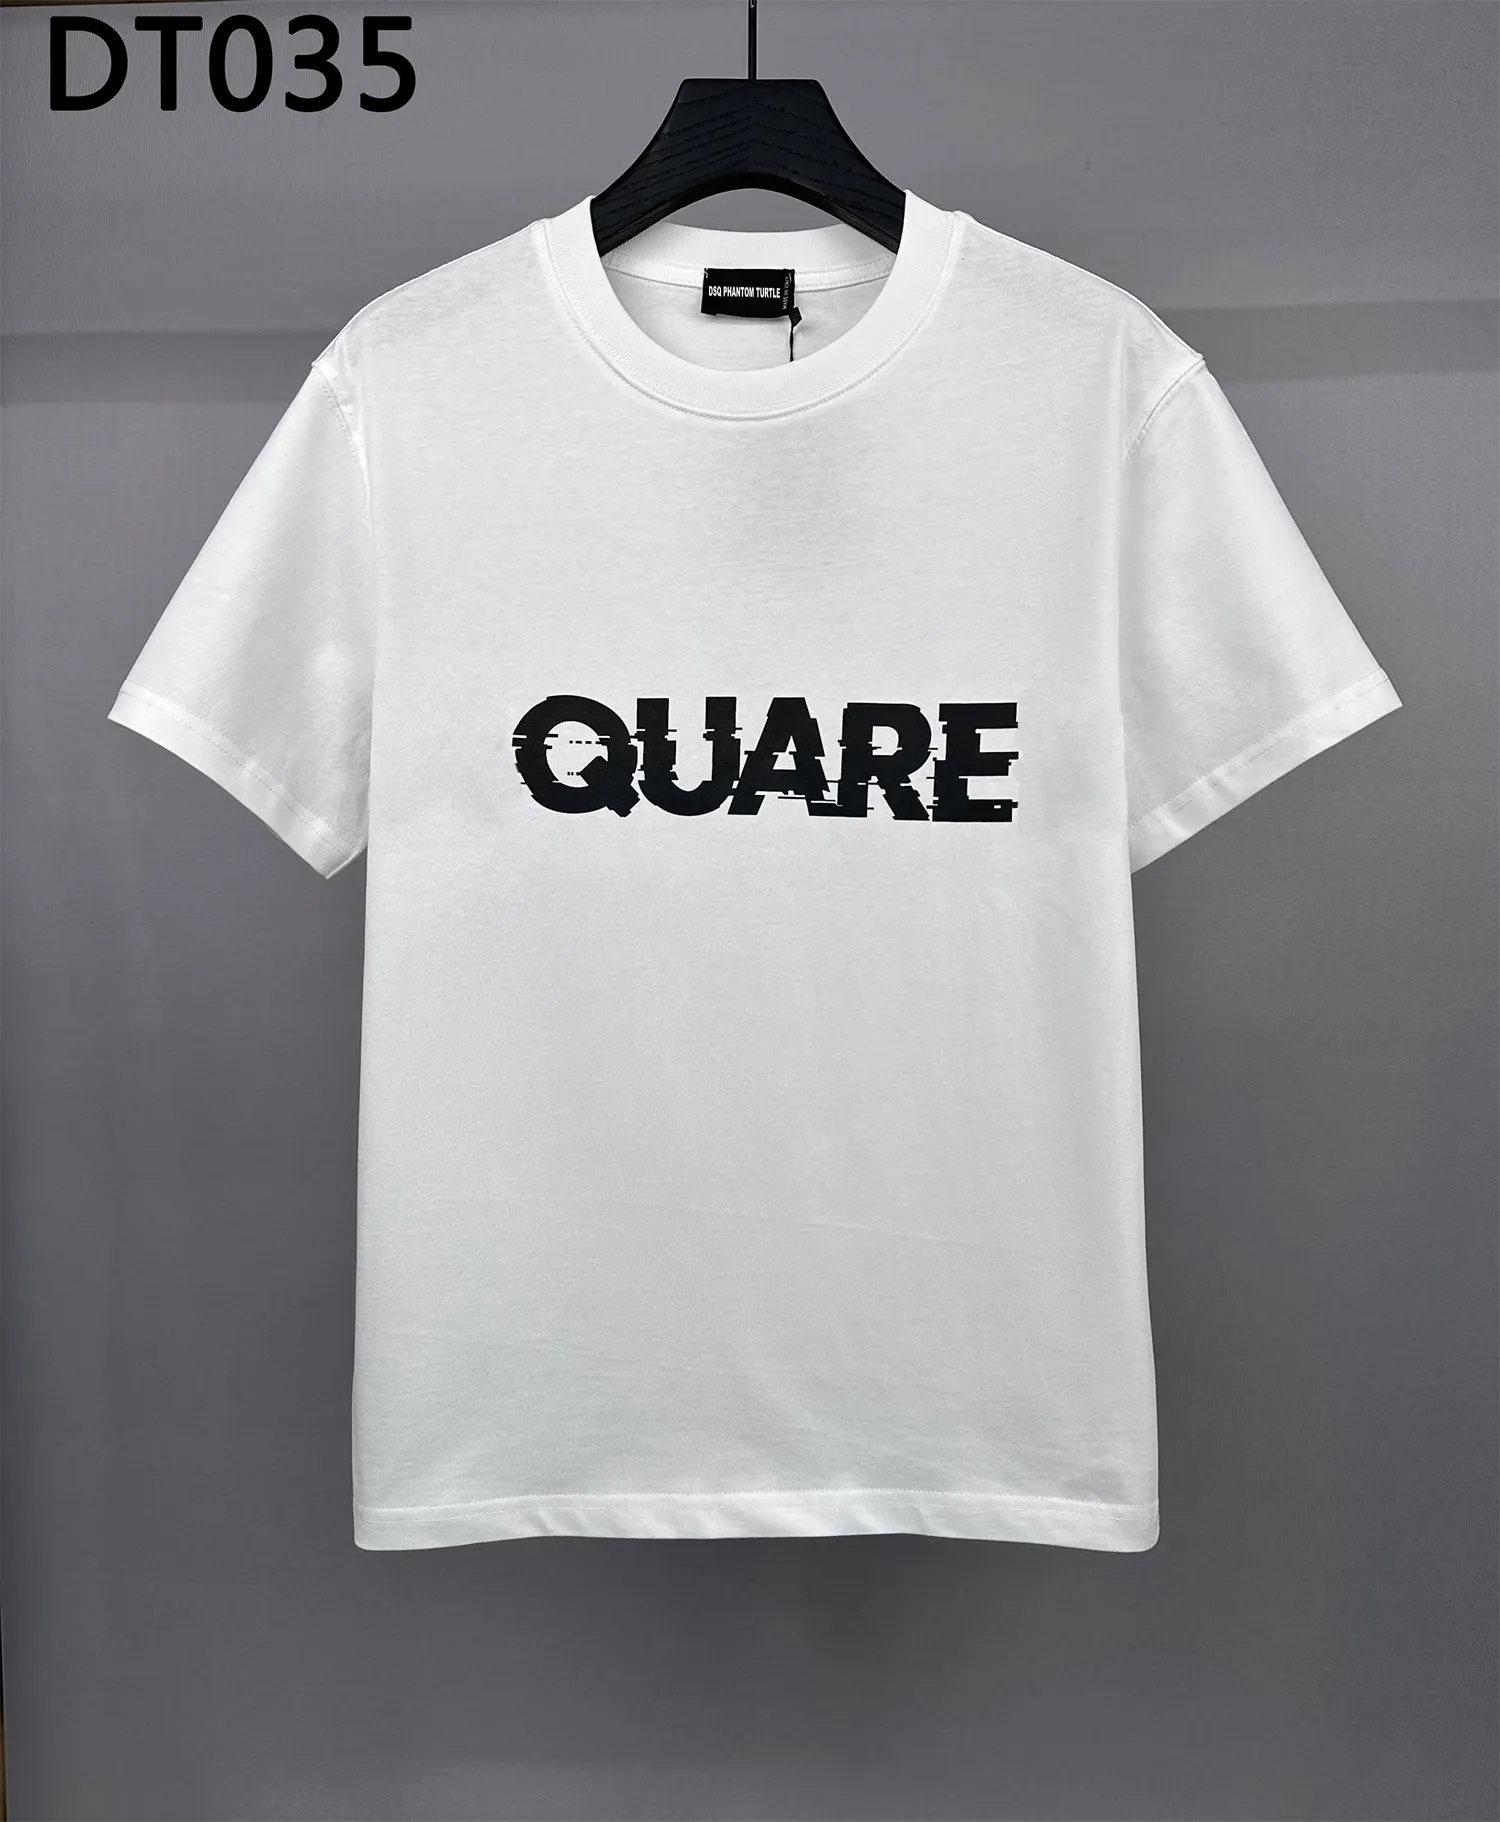 T-shirt maschile DSQ Phantom Turtle T-Shirt Mens Designer T-shirt Bianco Bianco Fangole Summer Italiano Tops di magliette Casual Street Plus M-XXXL 6176